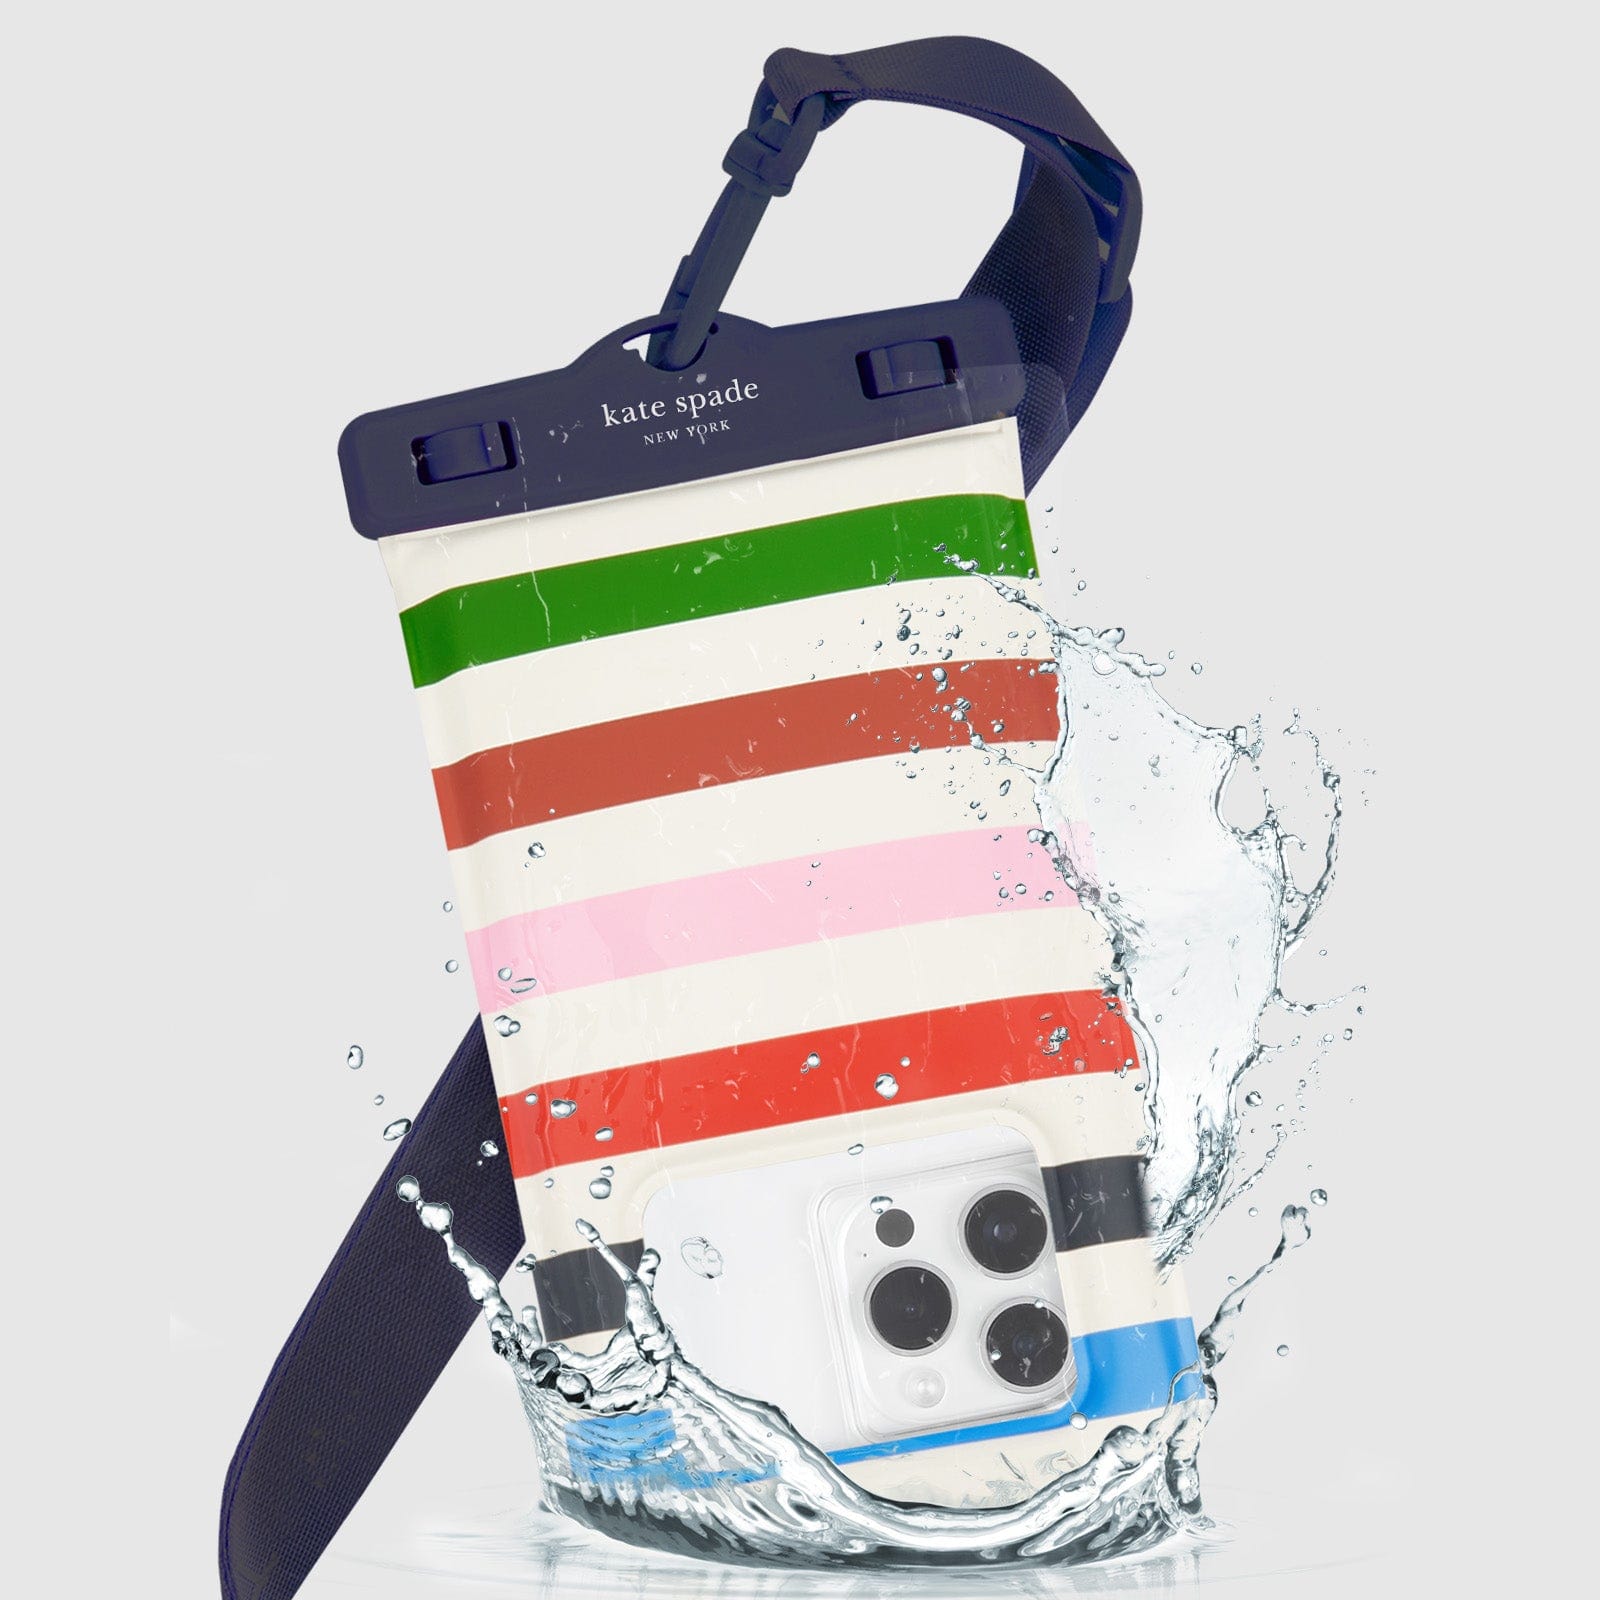 kate spade new york Adventure Stripe Waterproof Floating Pouch